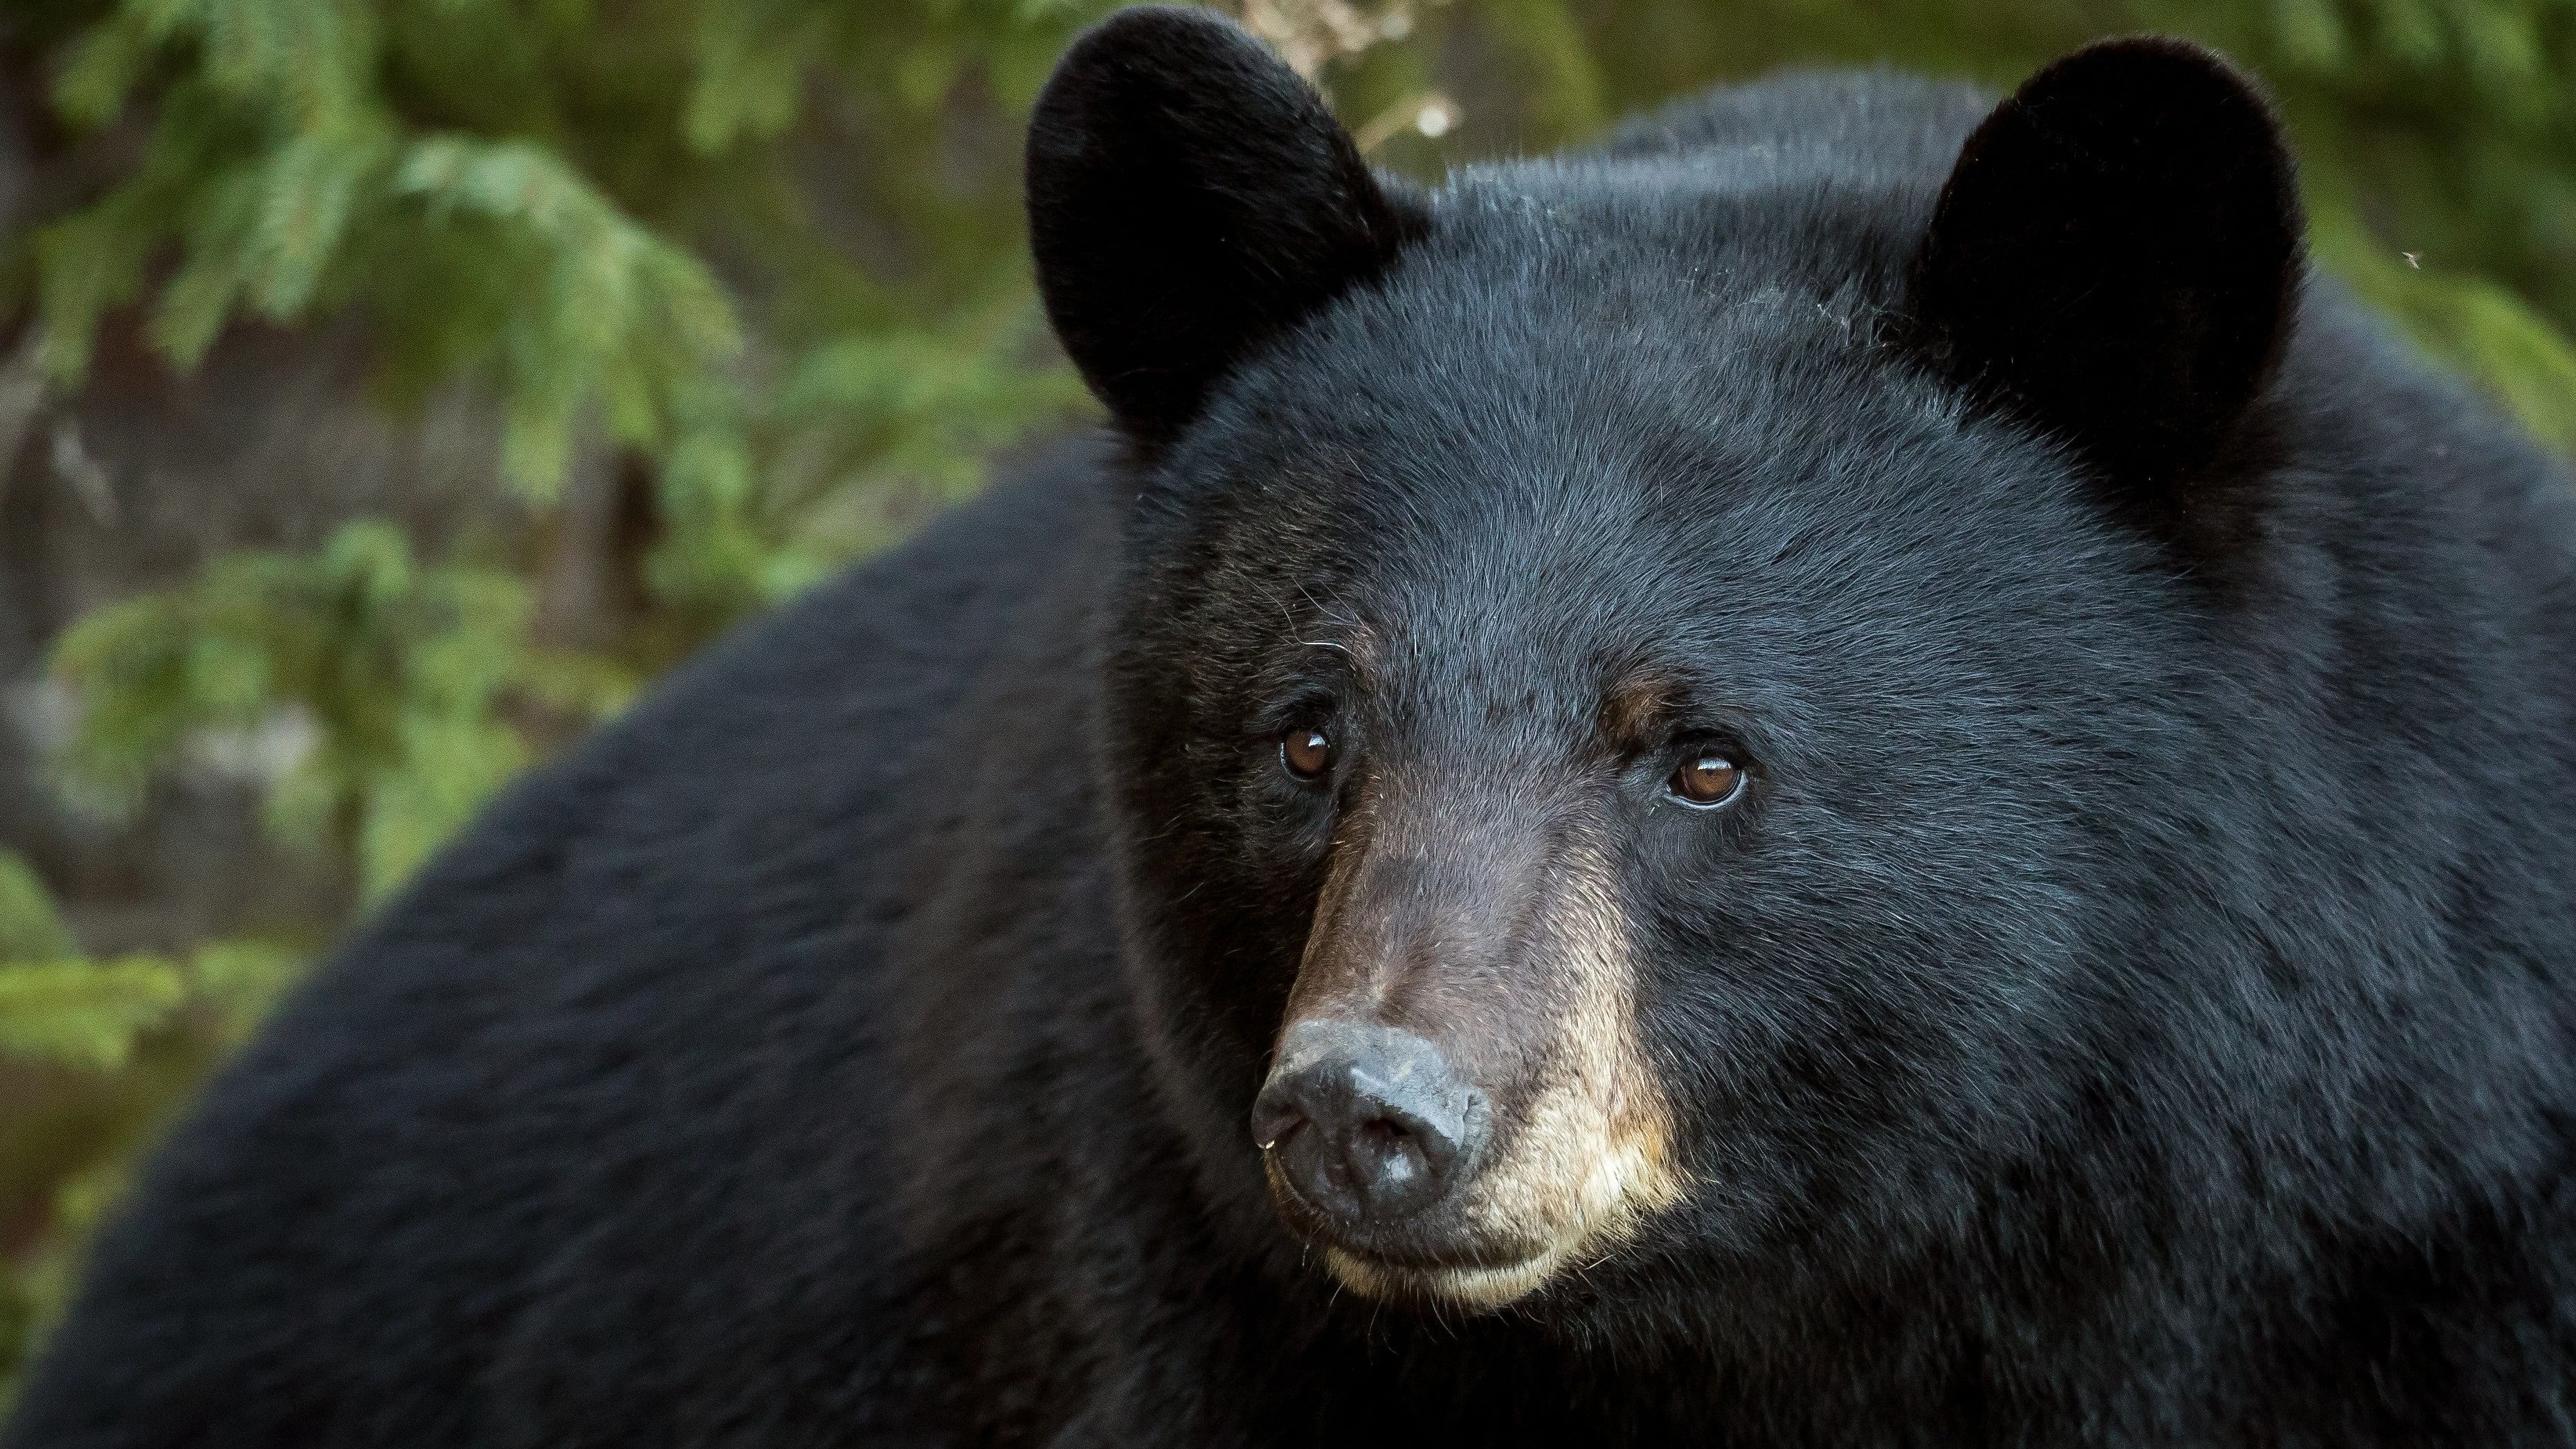 <div class="paragraphs"><p>Representative image showing an American black bear.</p></div>